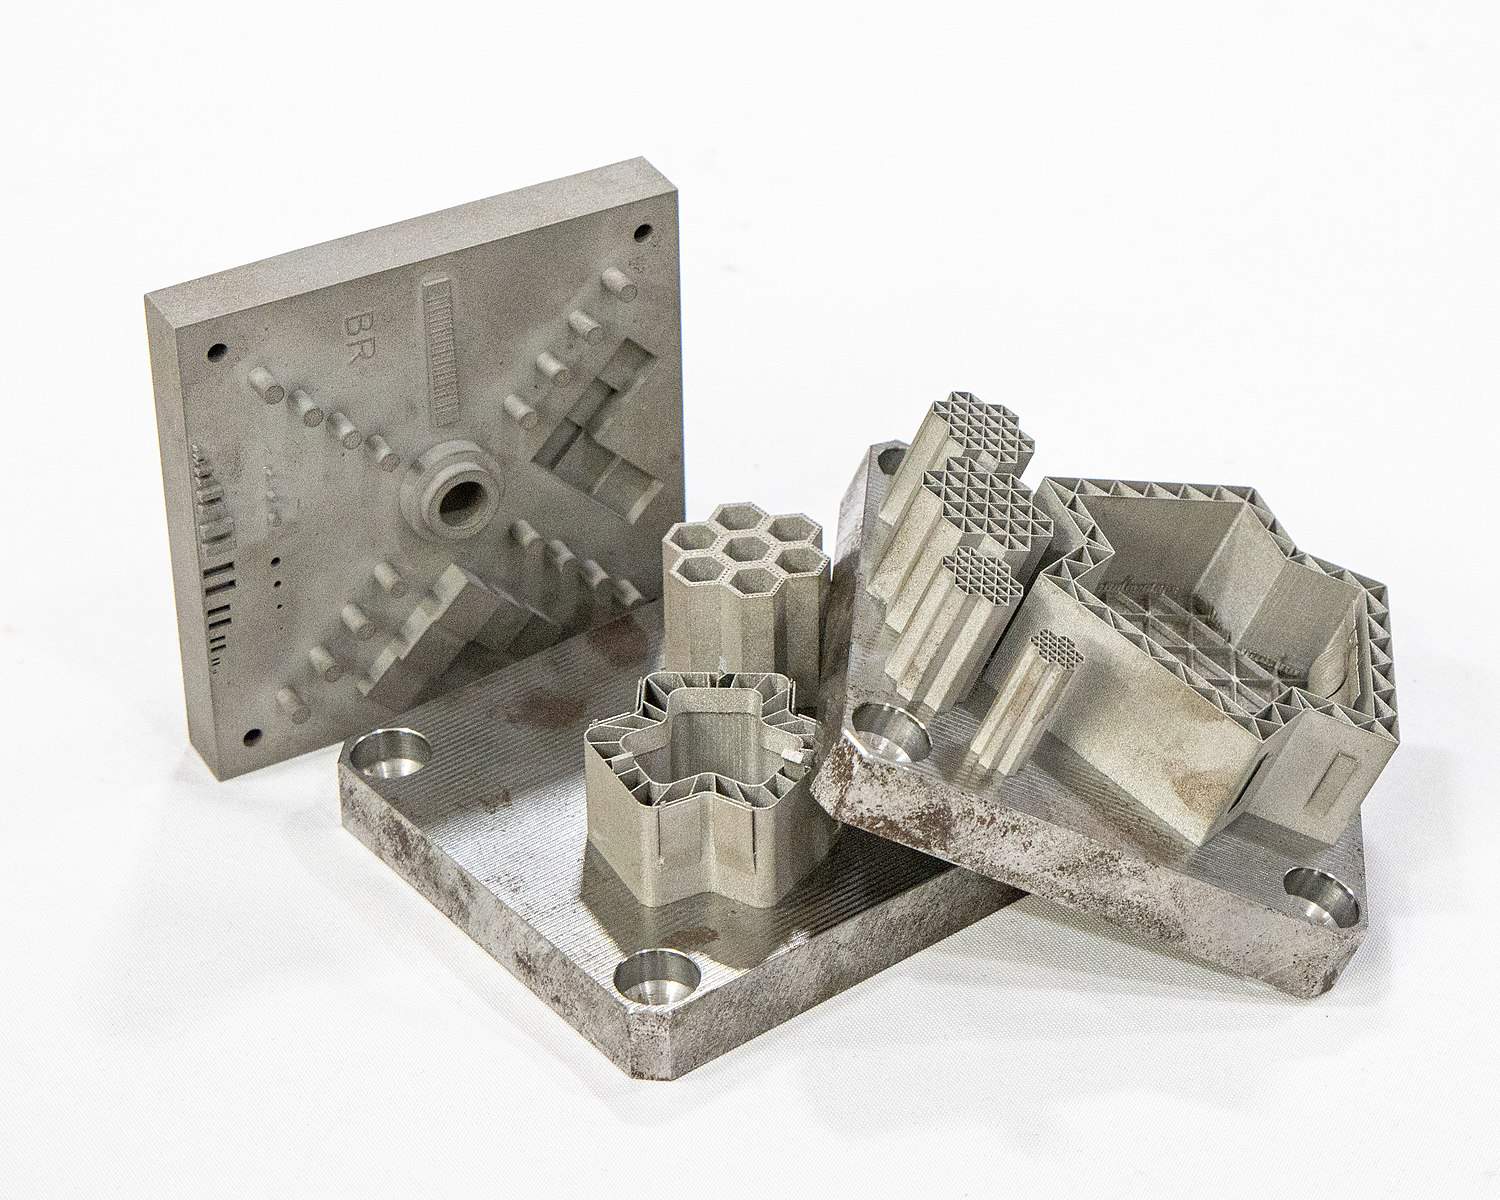 Metal 3D printed component... by Oak Ridge National Laboratory